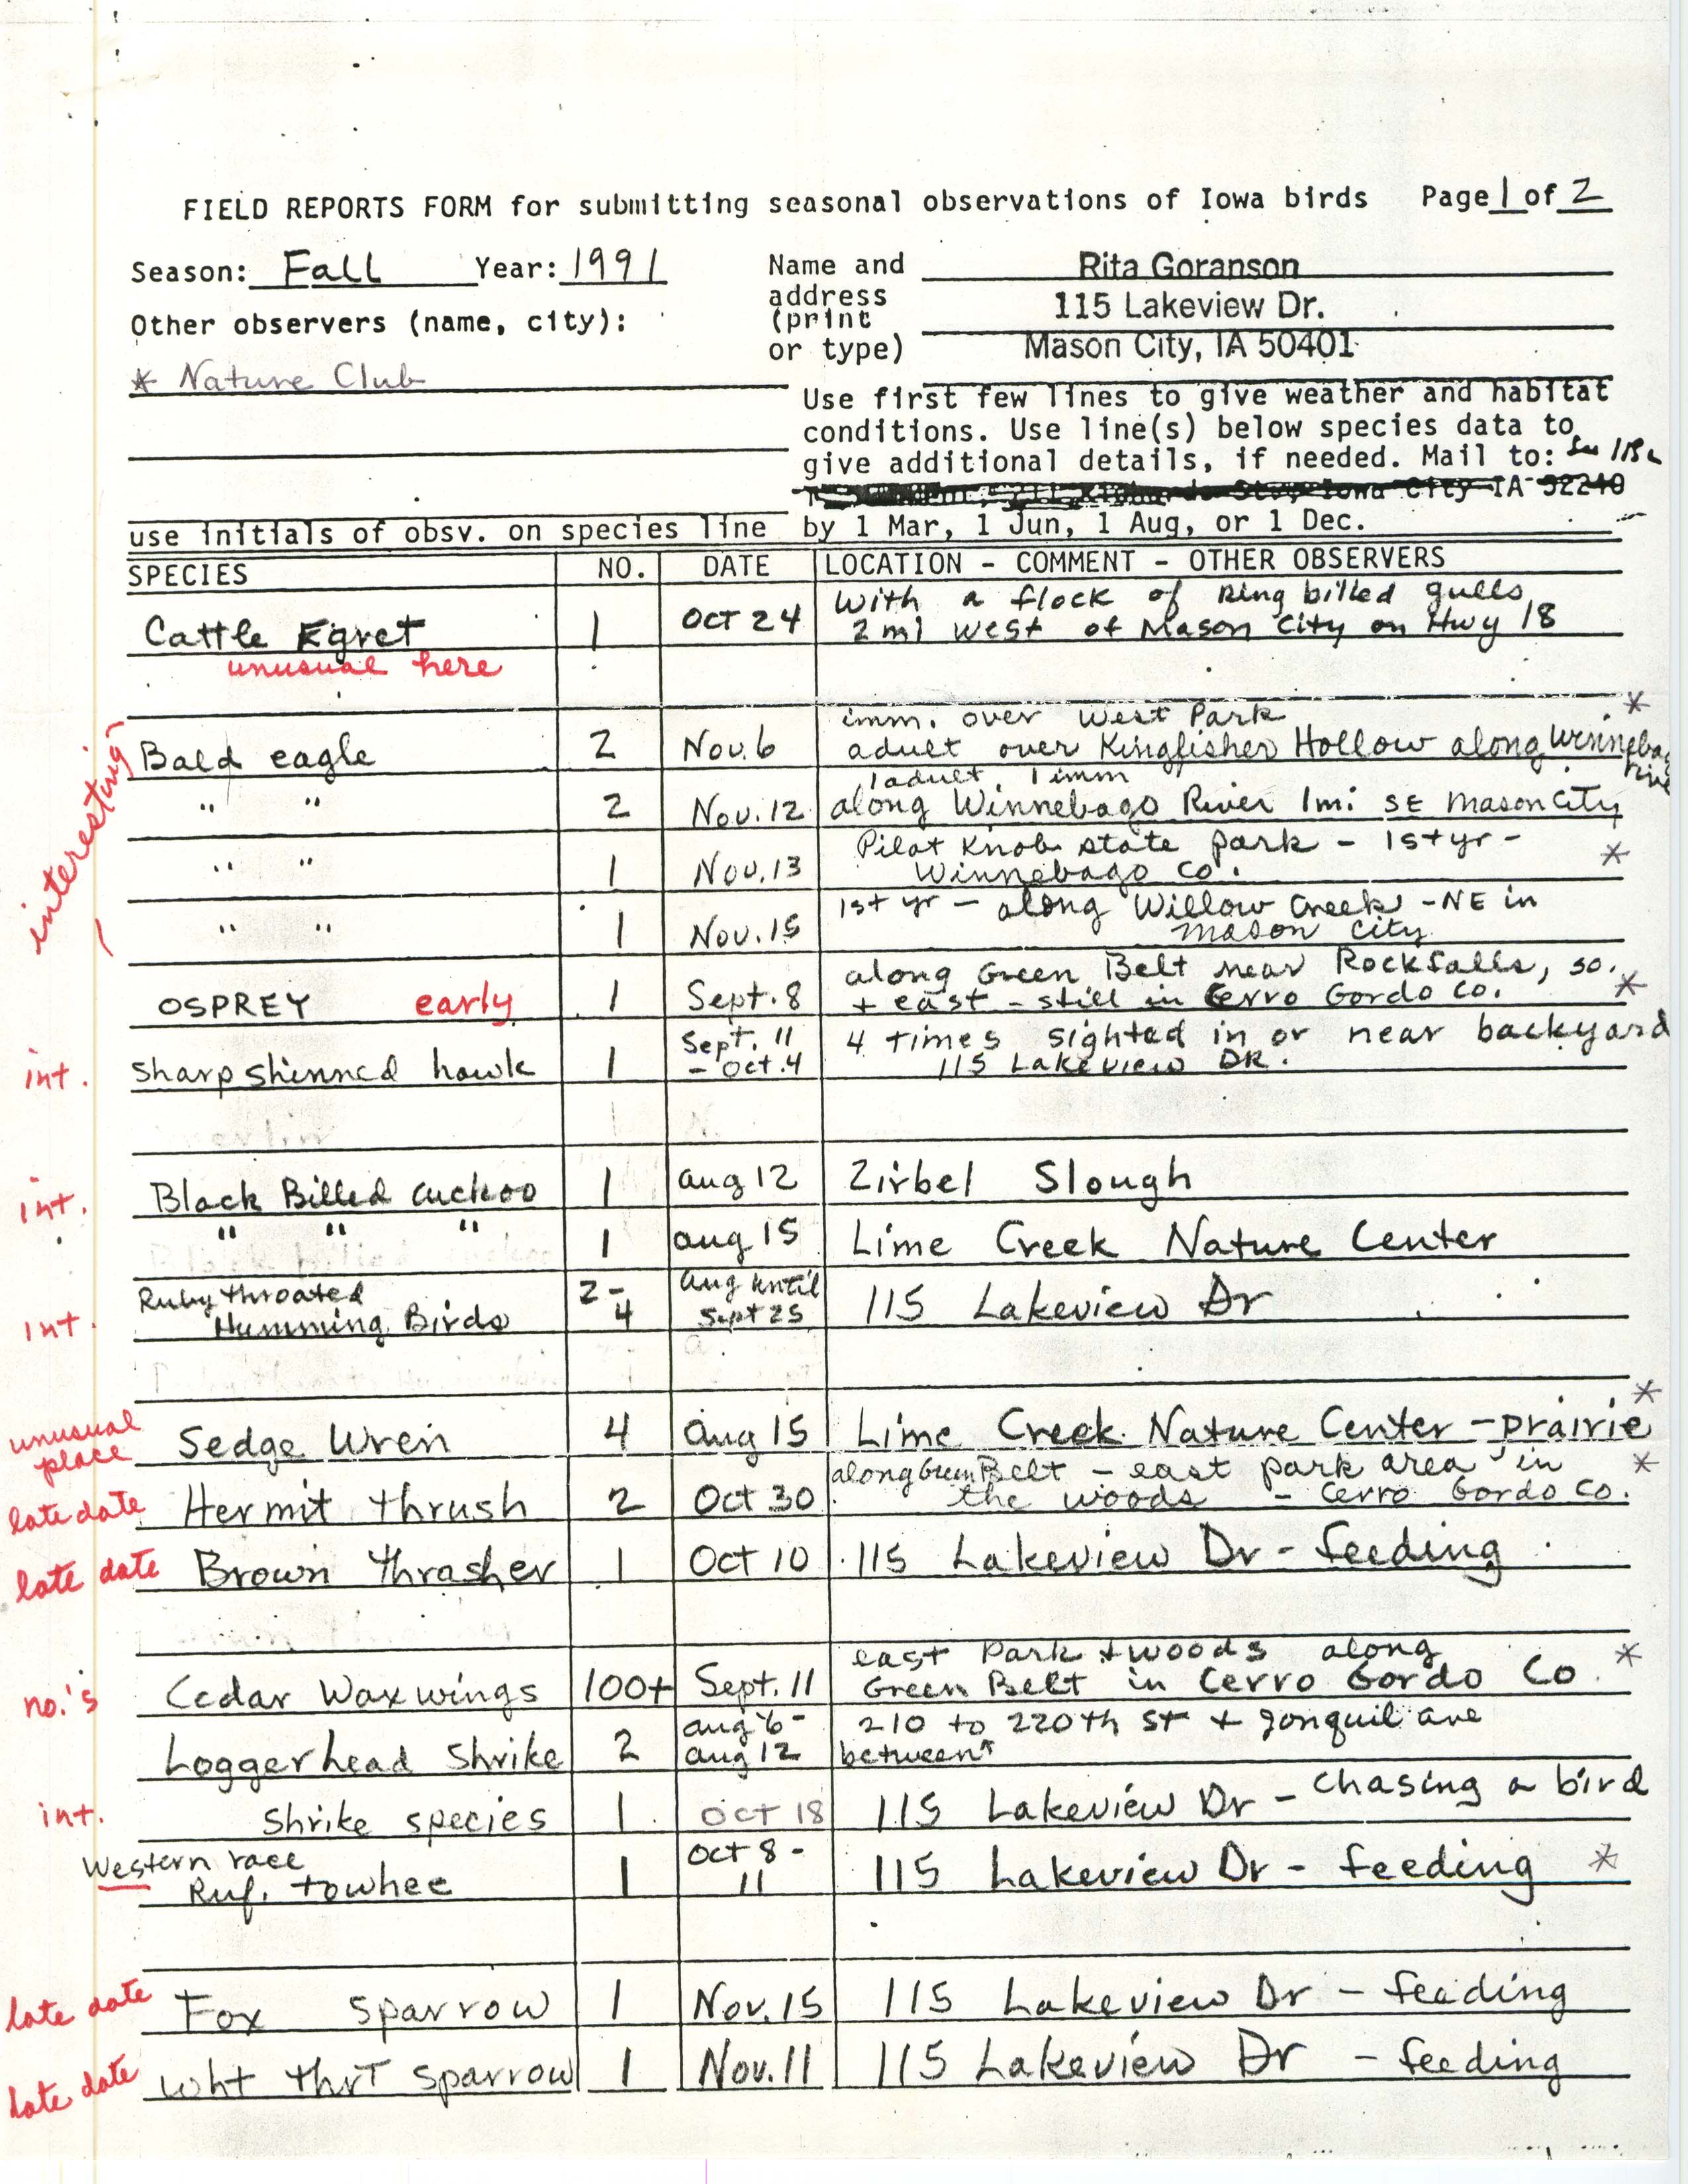 Field notes and Rita Goranson letter to Thomas H. Kent, November 29, 1991